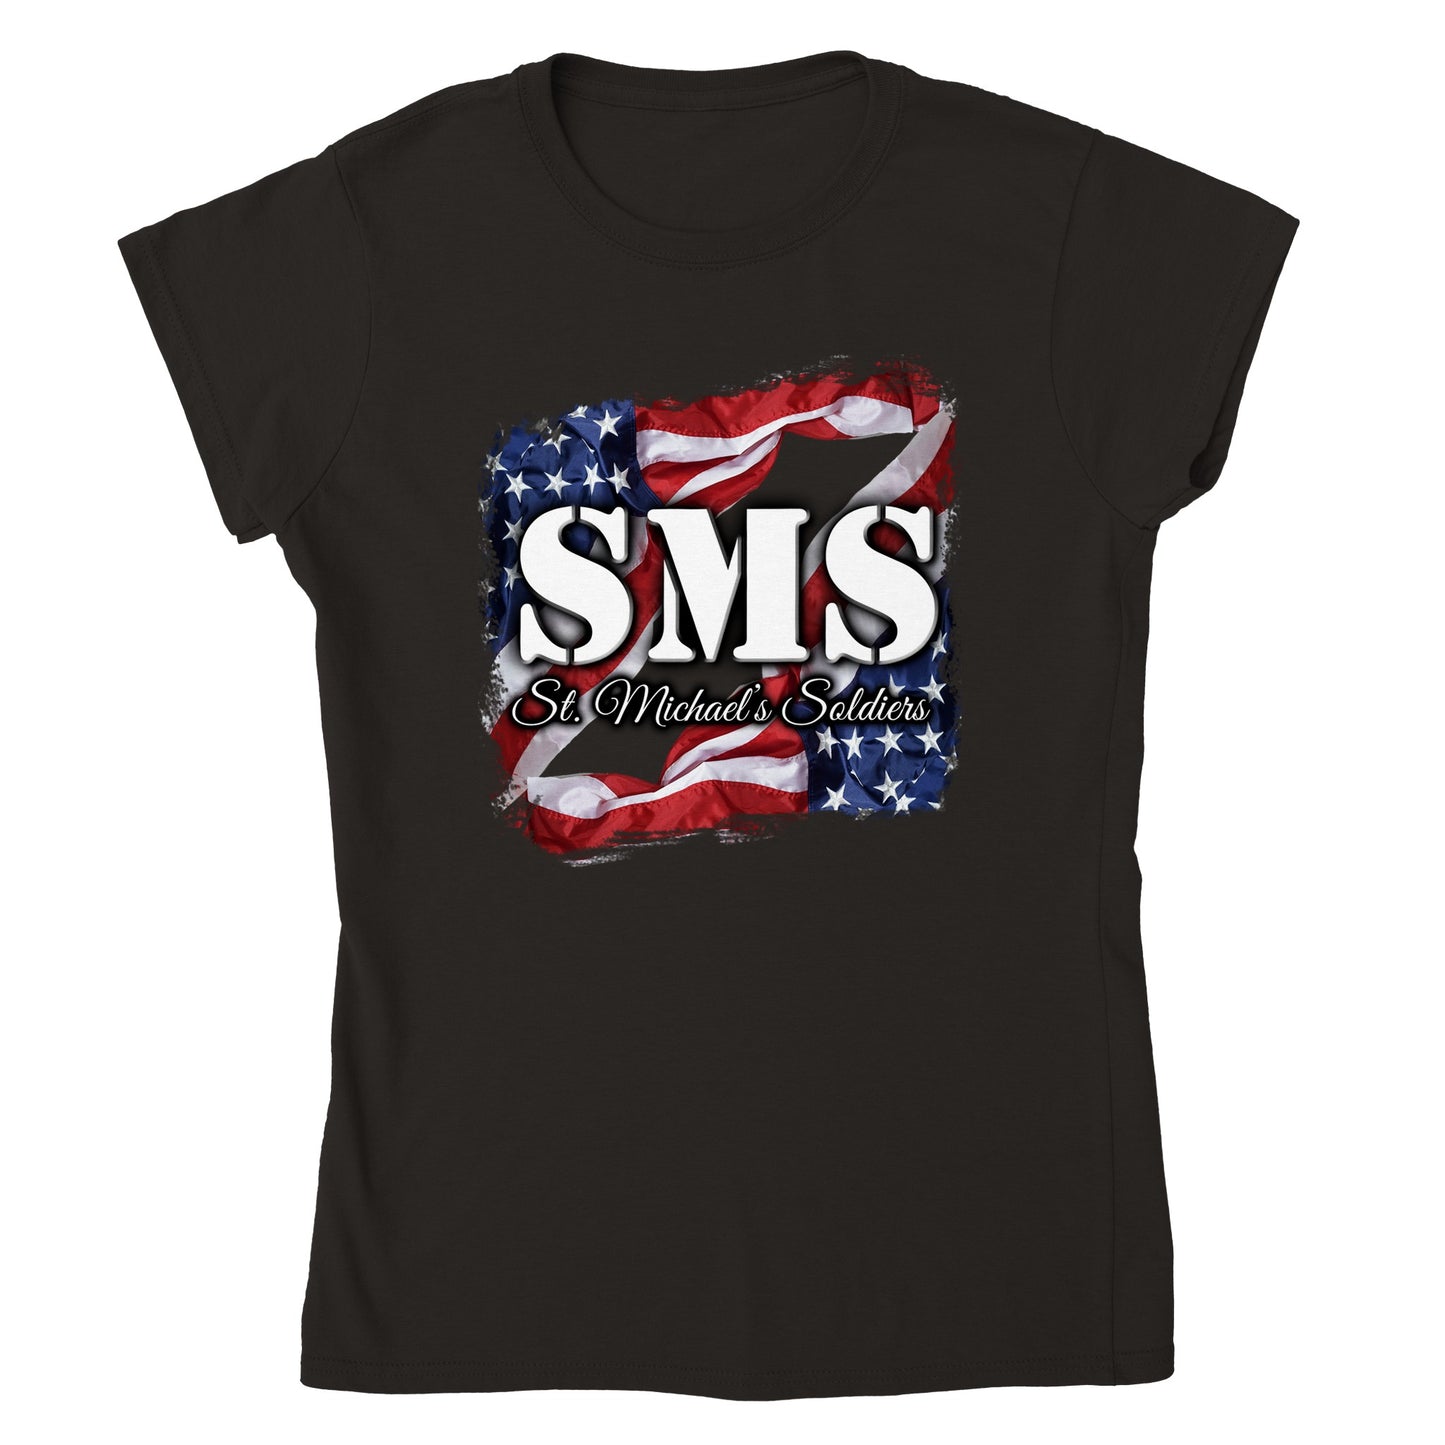 SMS (Flag1) - Classic Womens Crewneck T-shirt